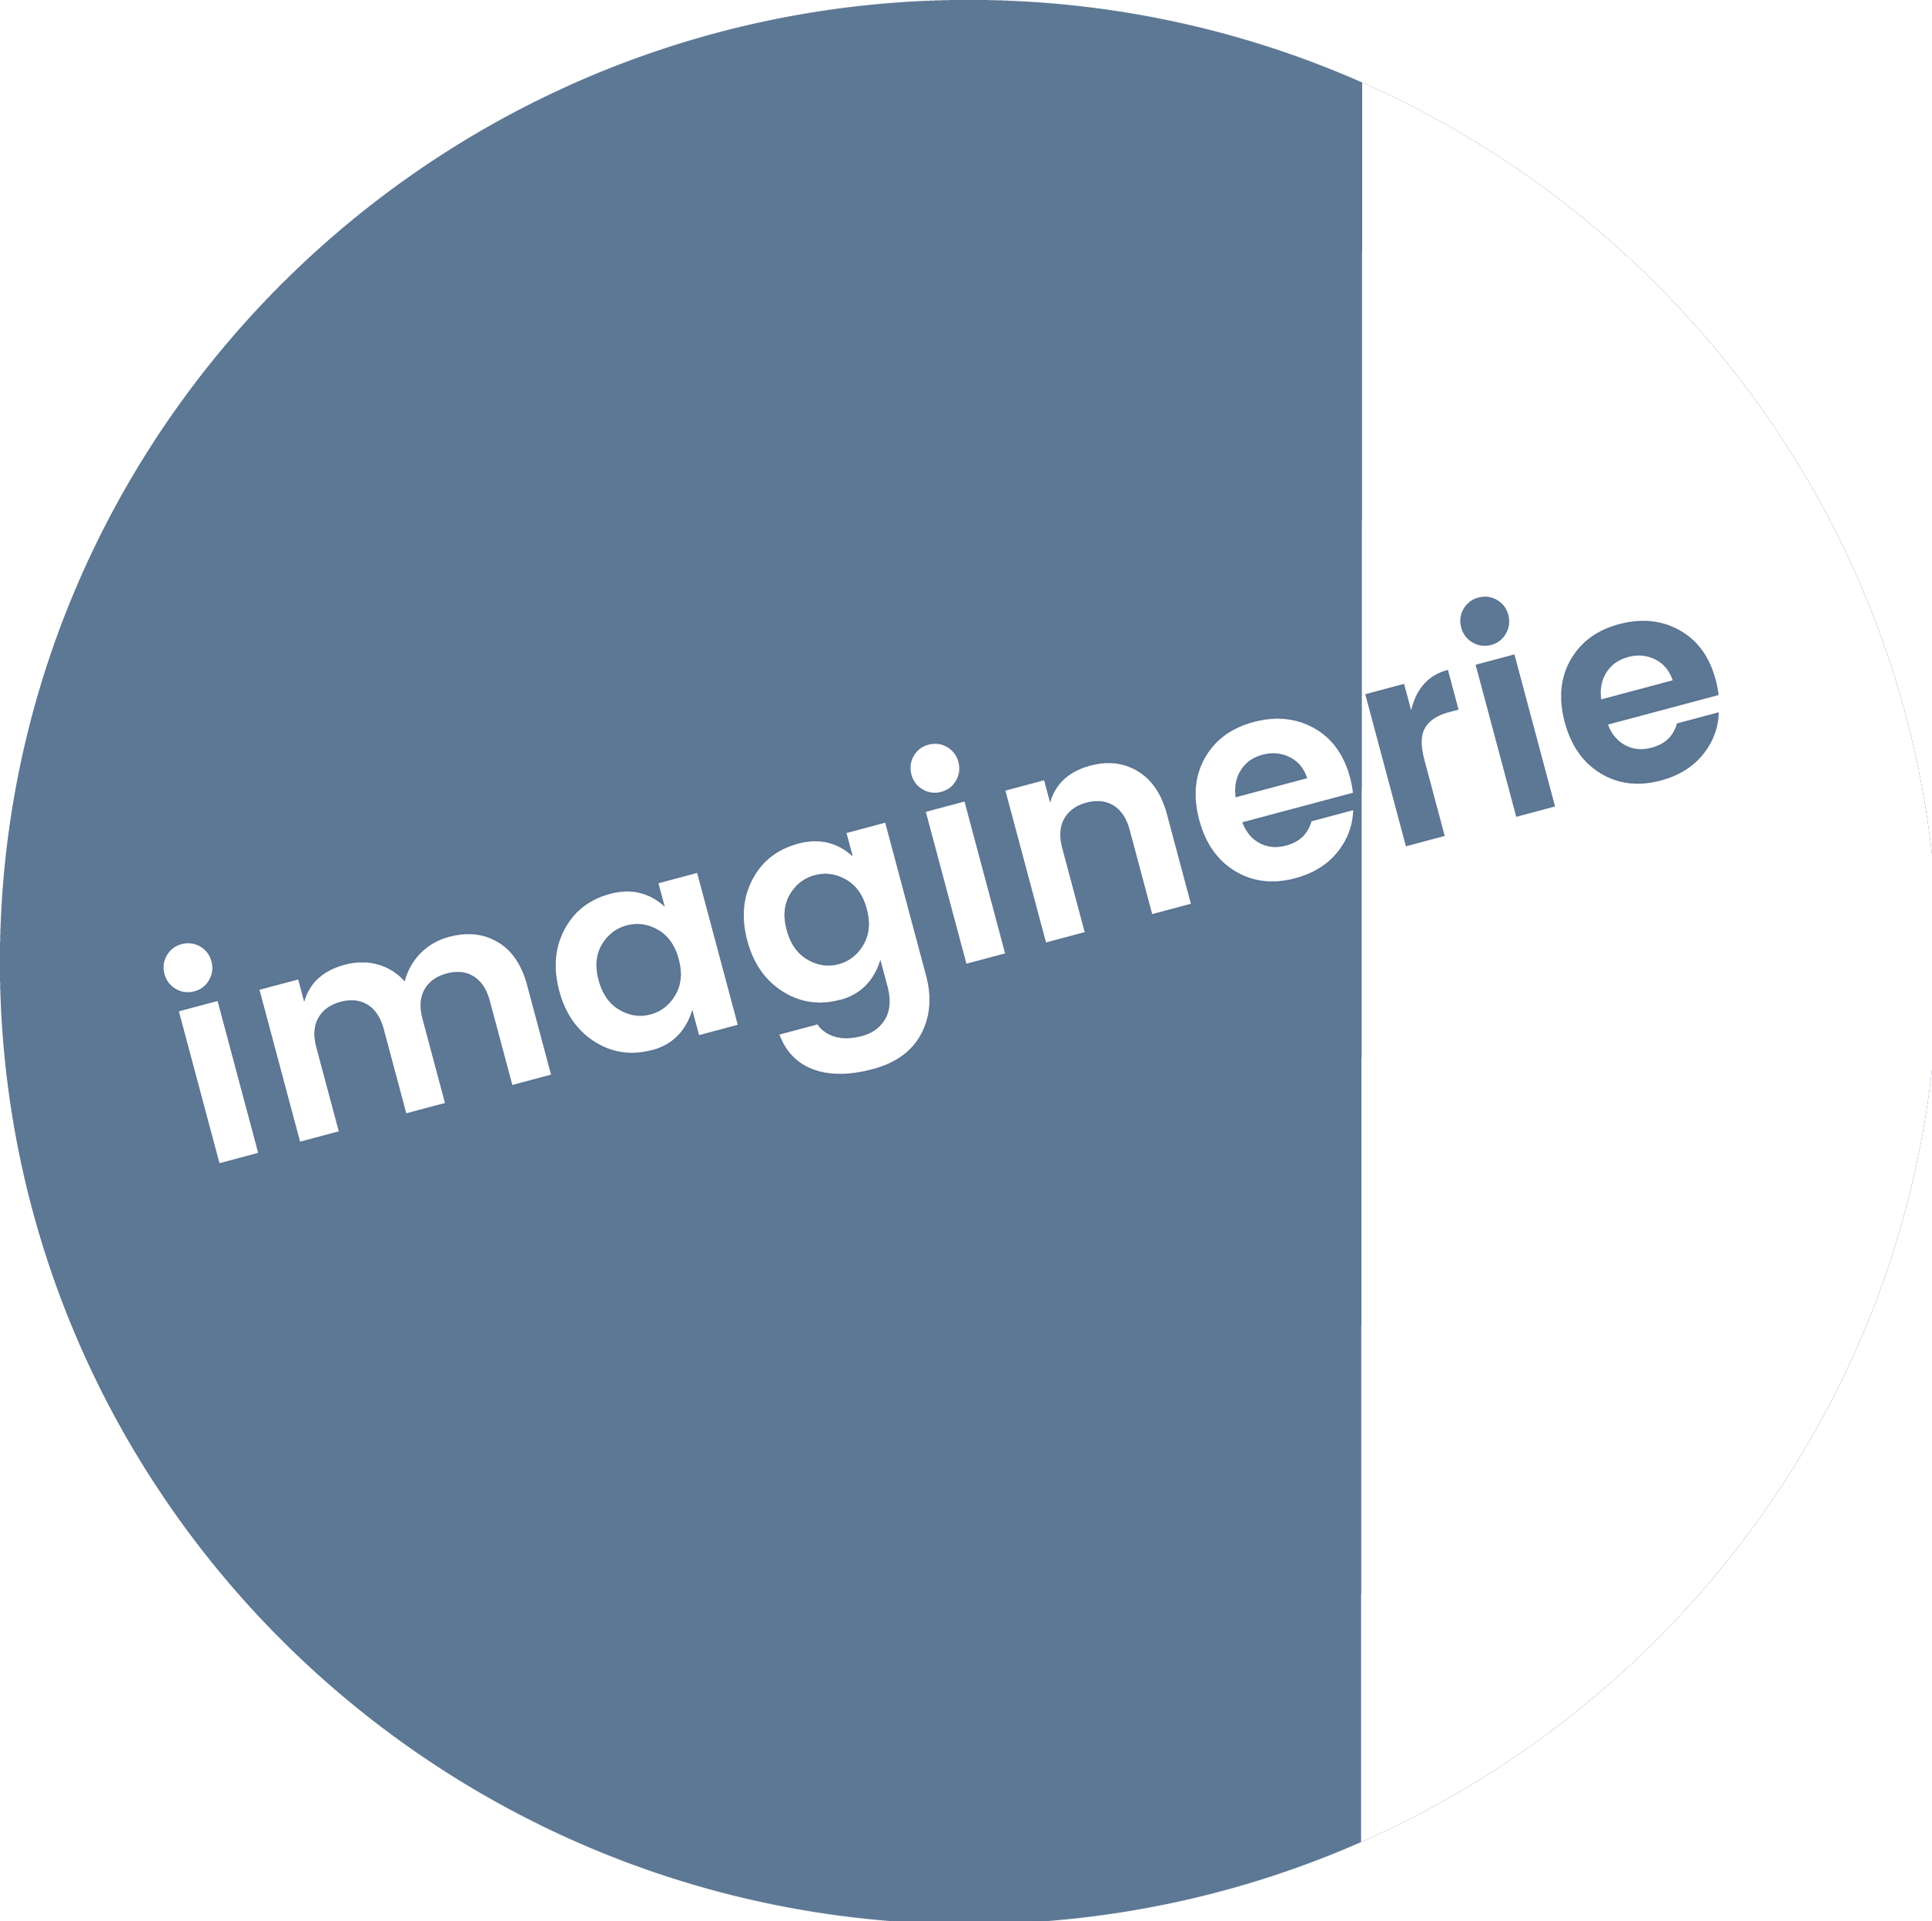 Imaginerie logo